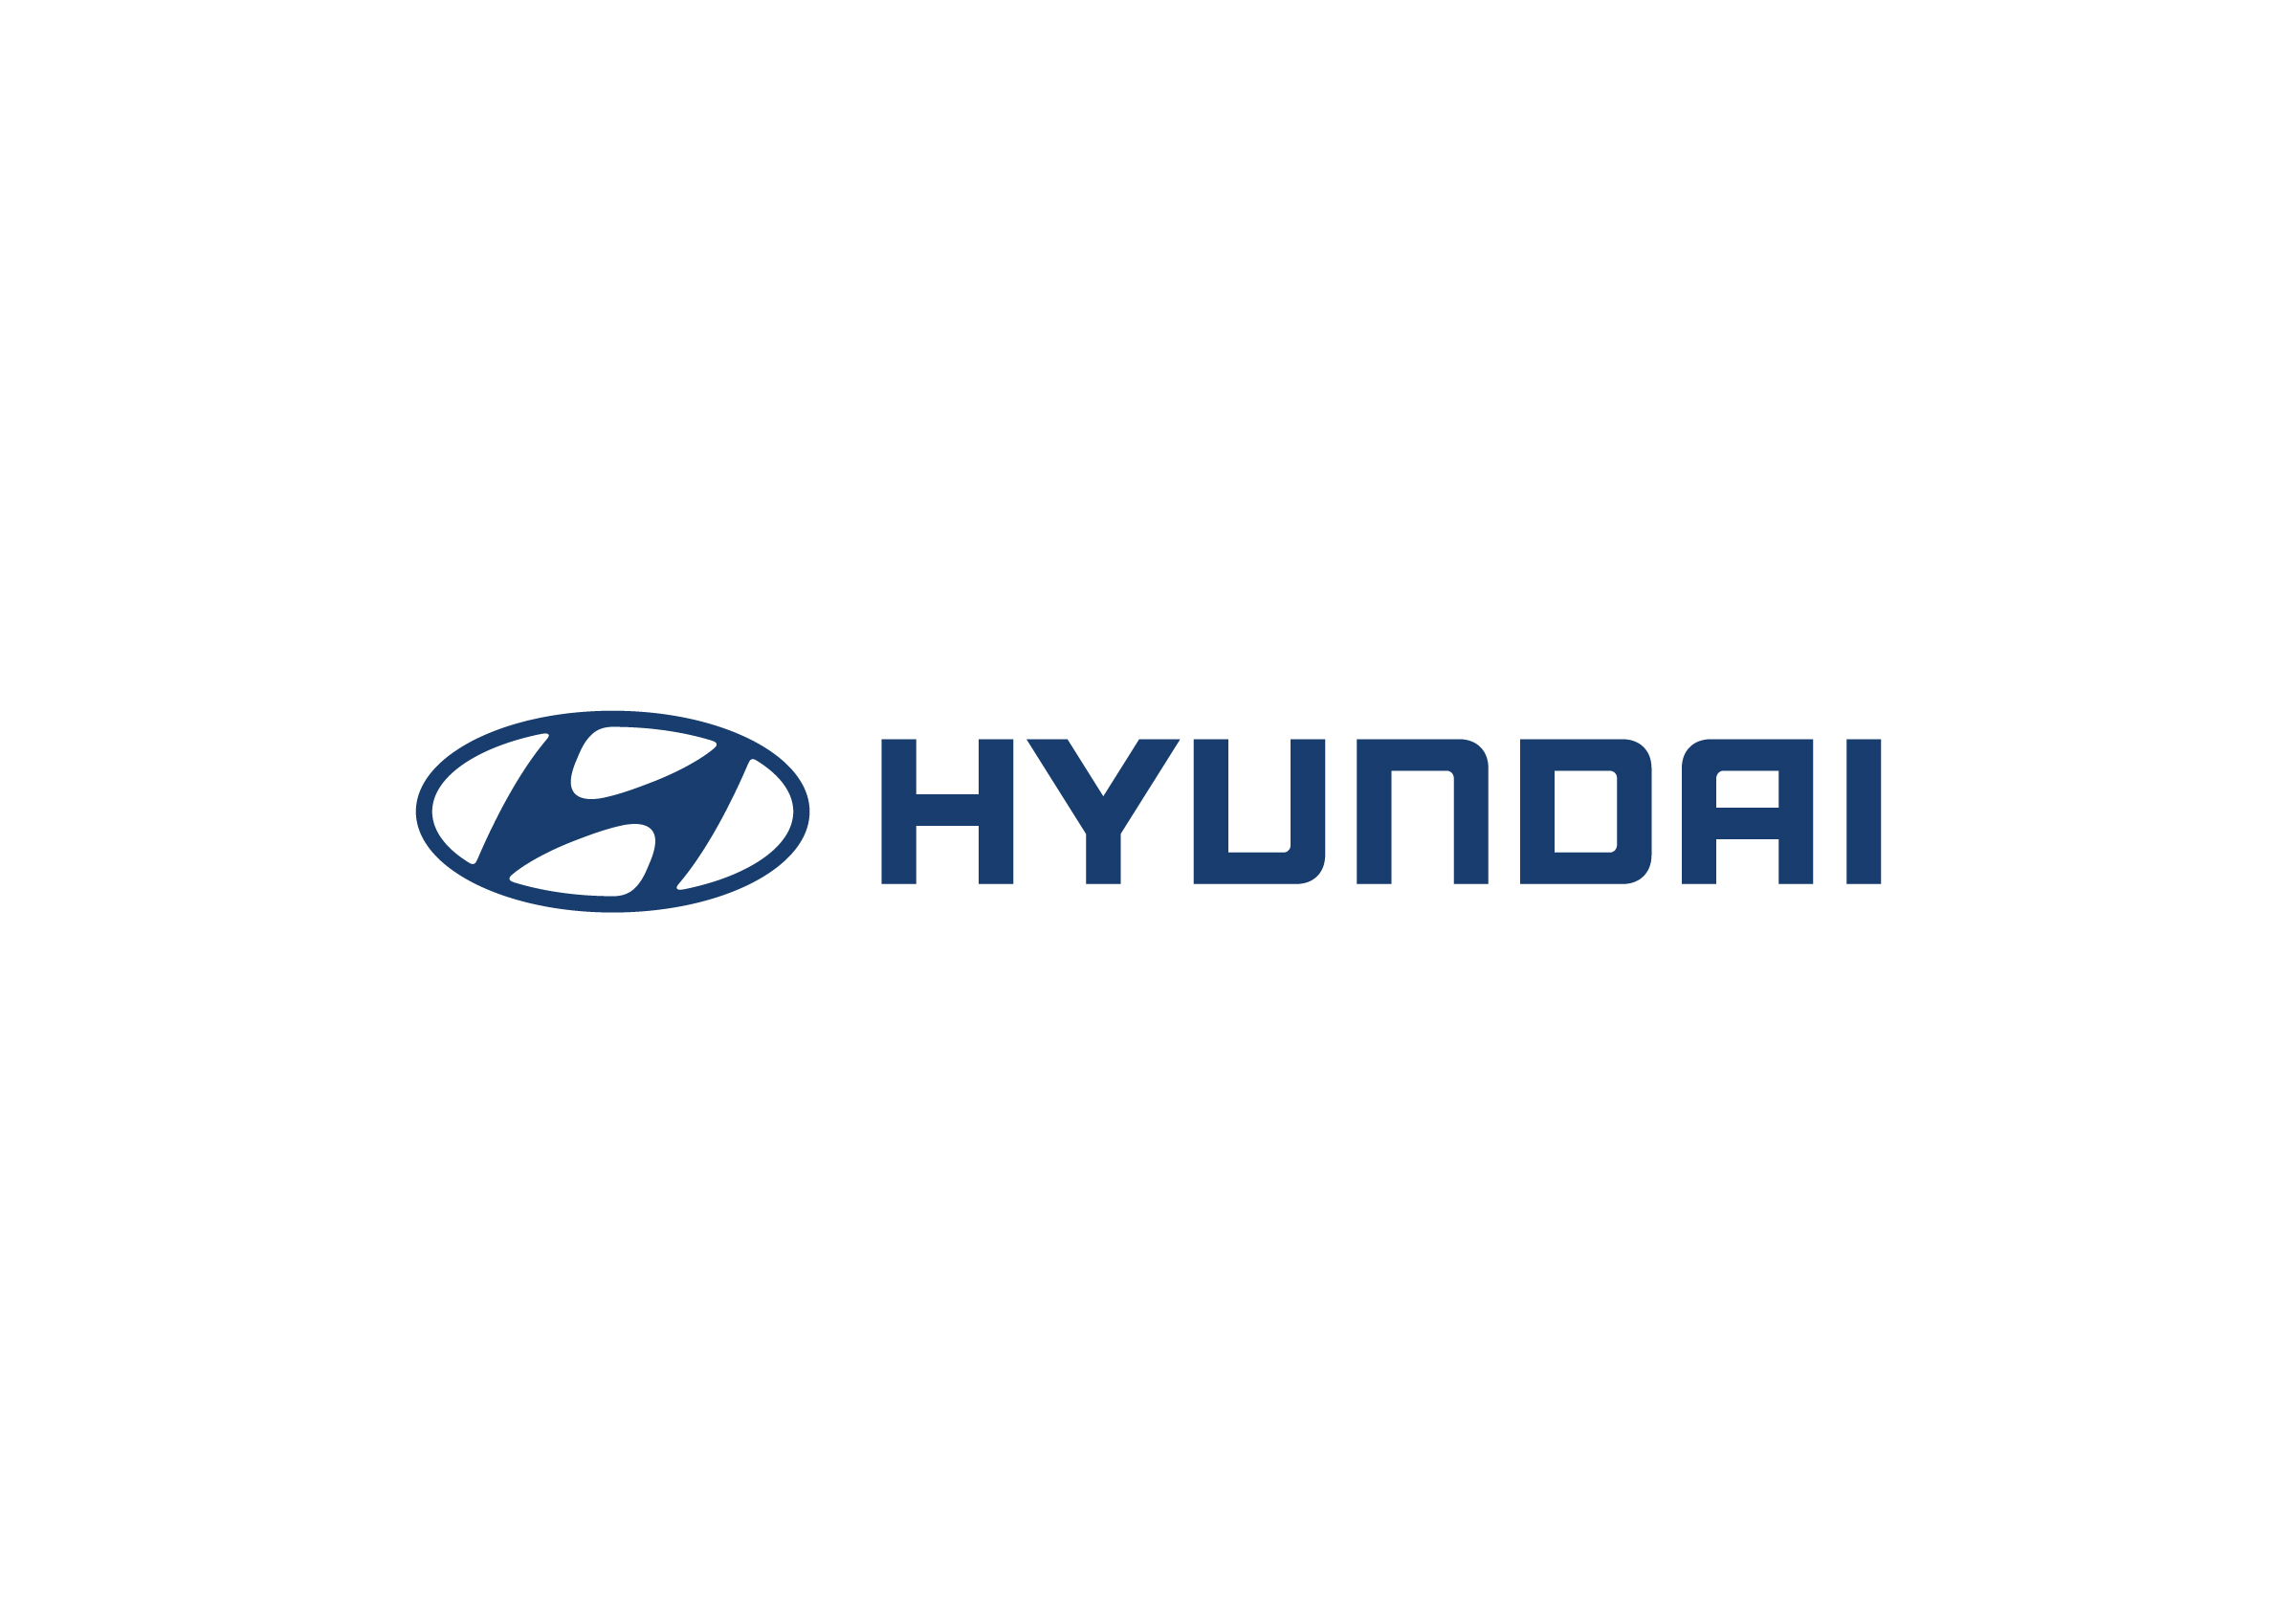 Design, progress and innovation: the future Hyundai is already here